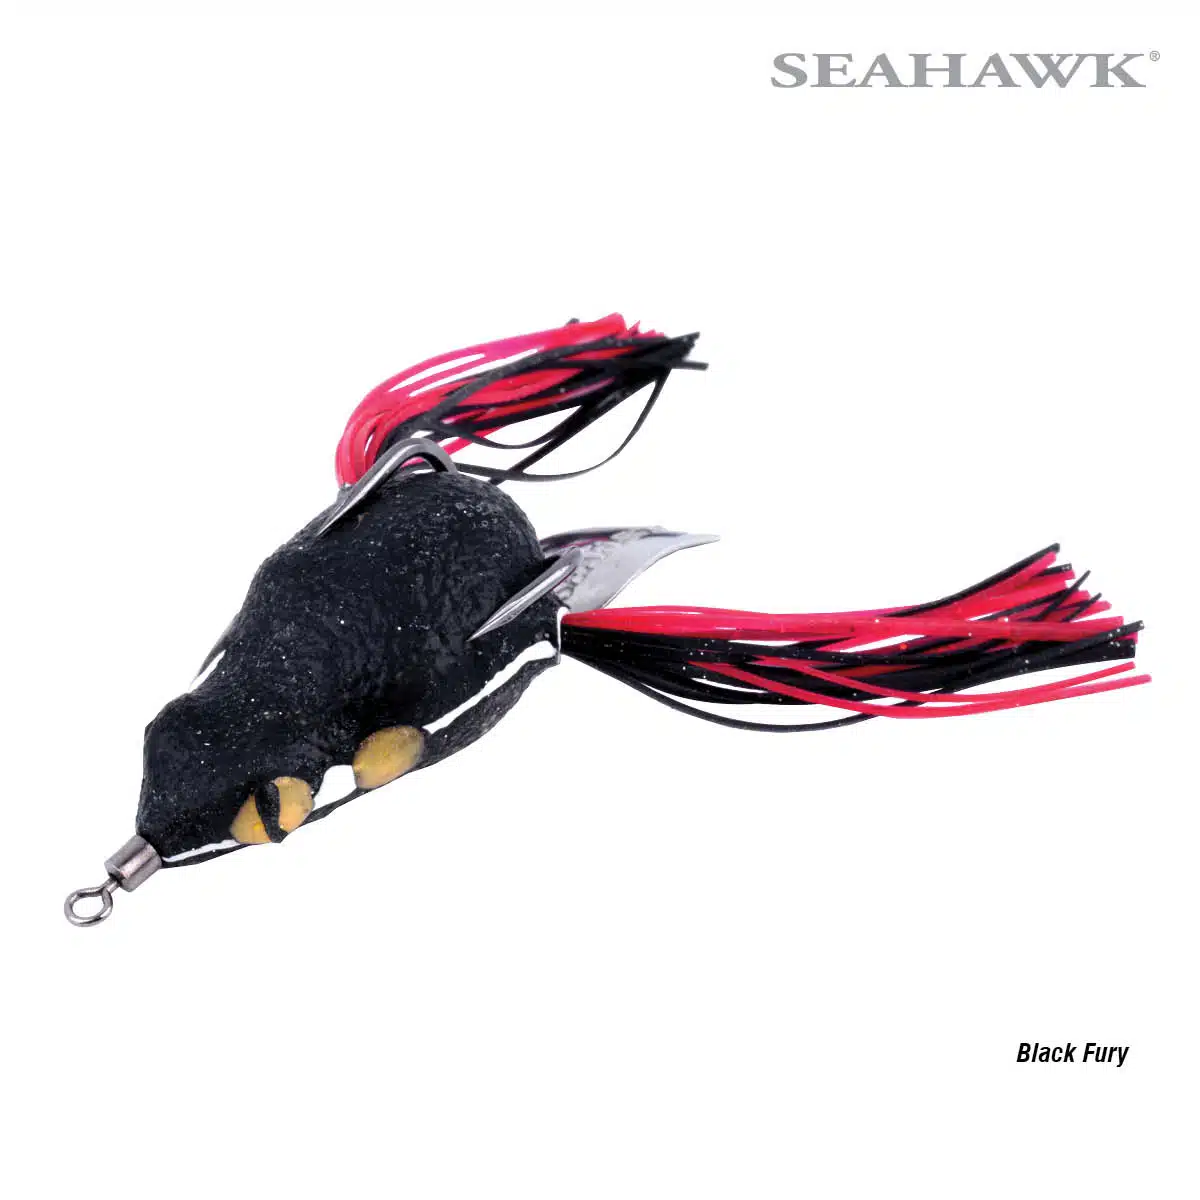 Seahawk Arrow Frog 40 Black Fury